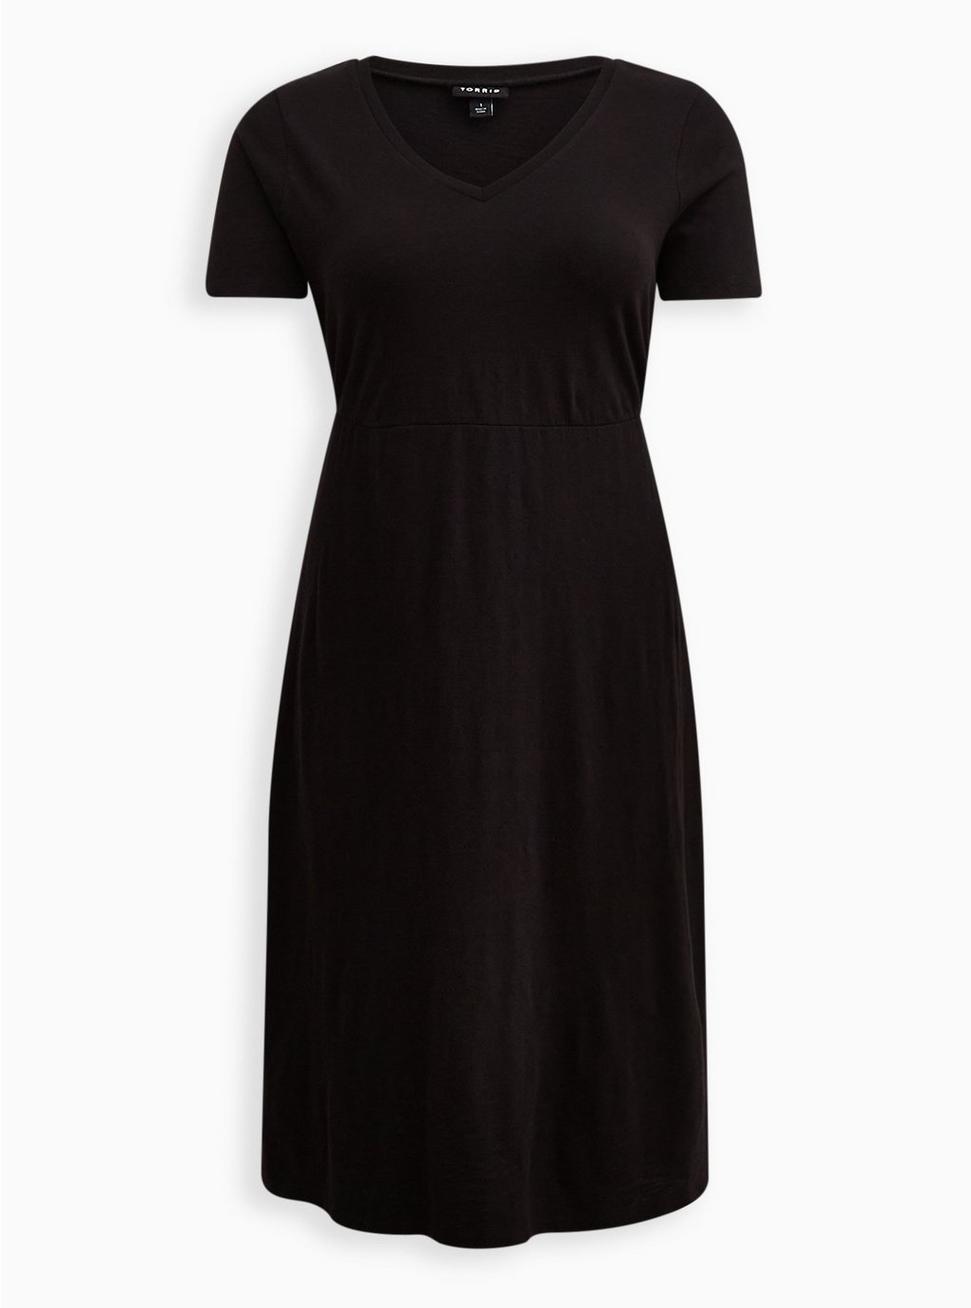 Midi Cotton Slub Side Slit Dress, BLACK, hi-res